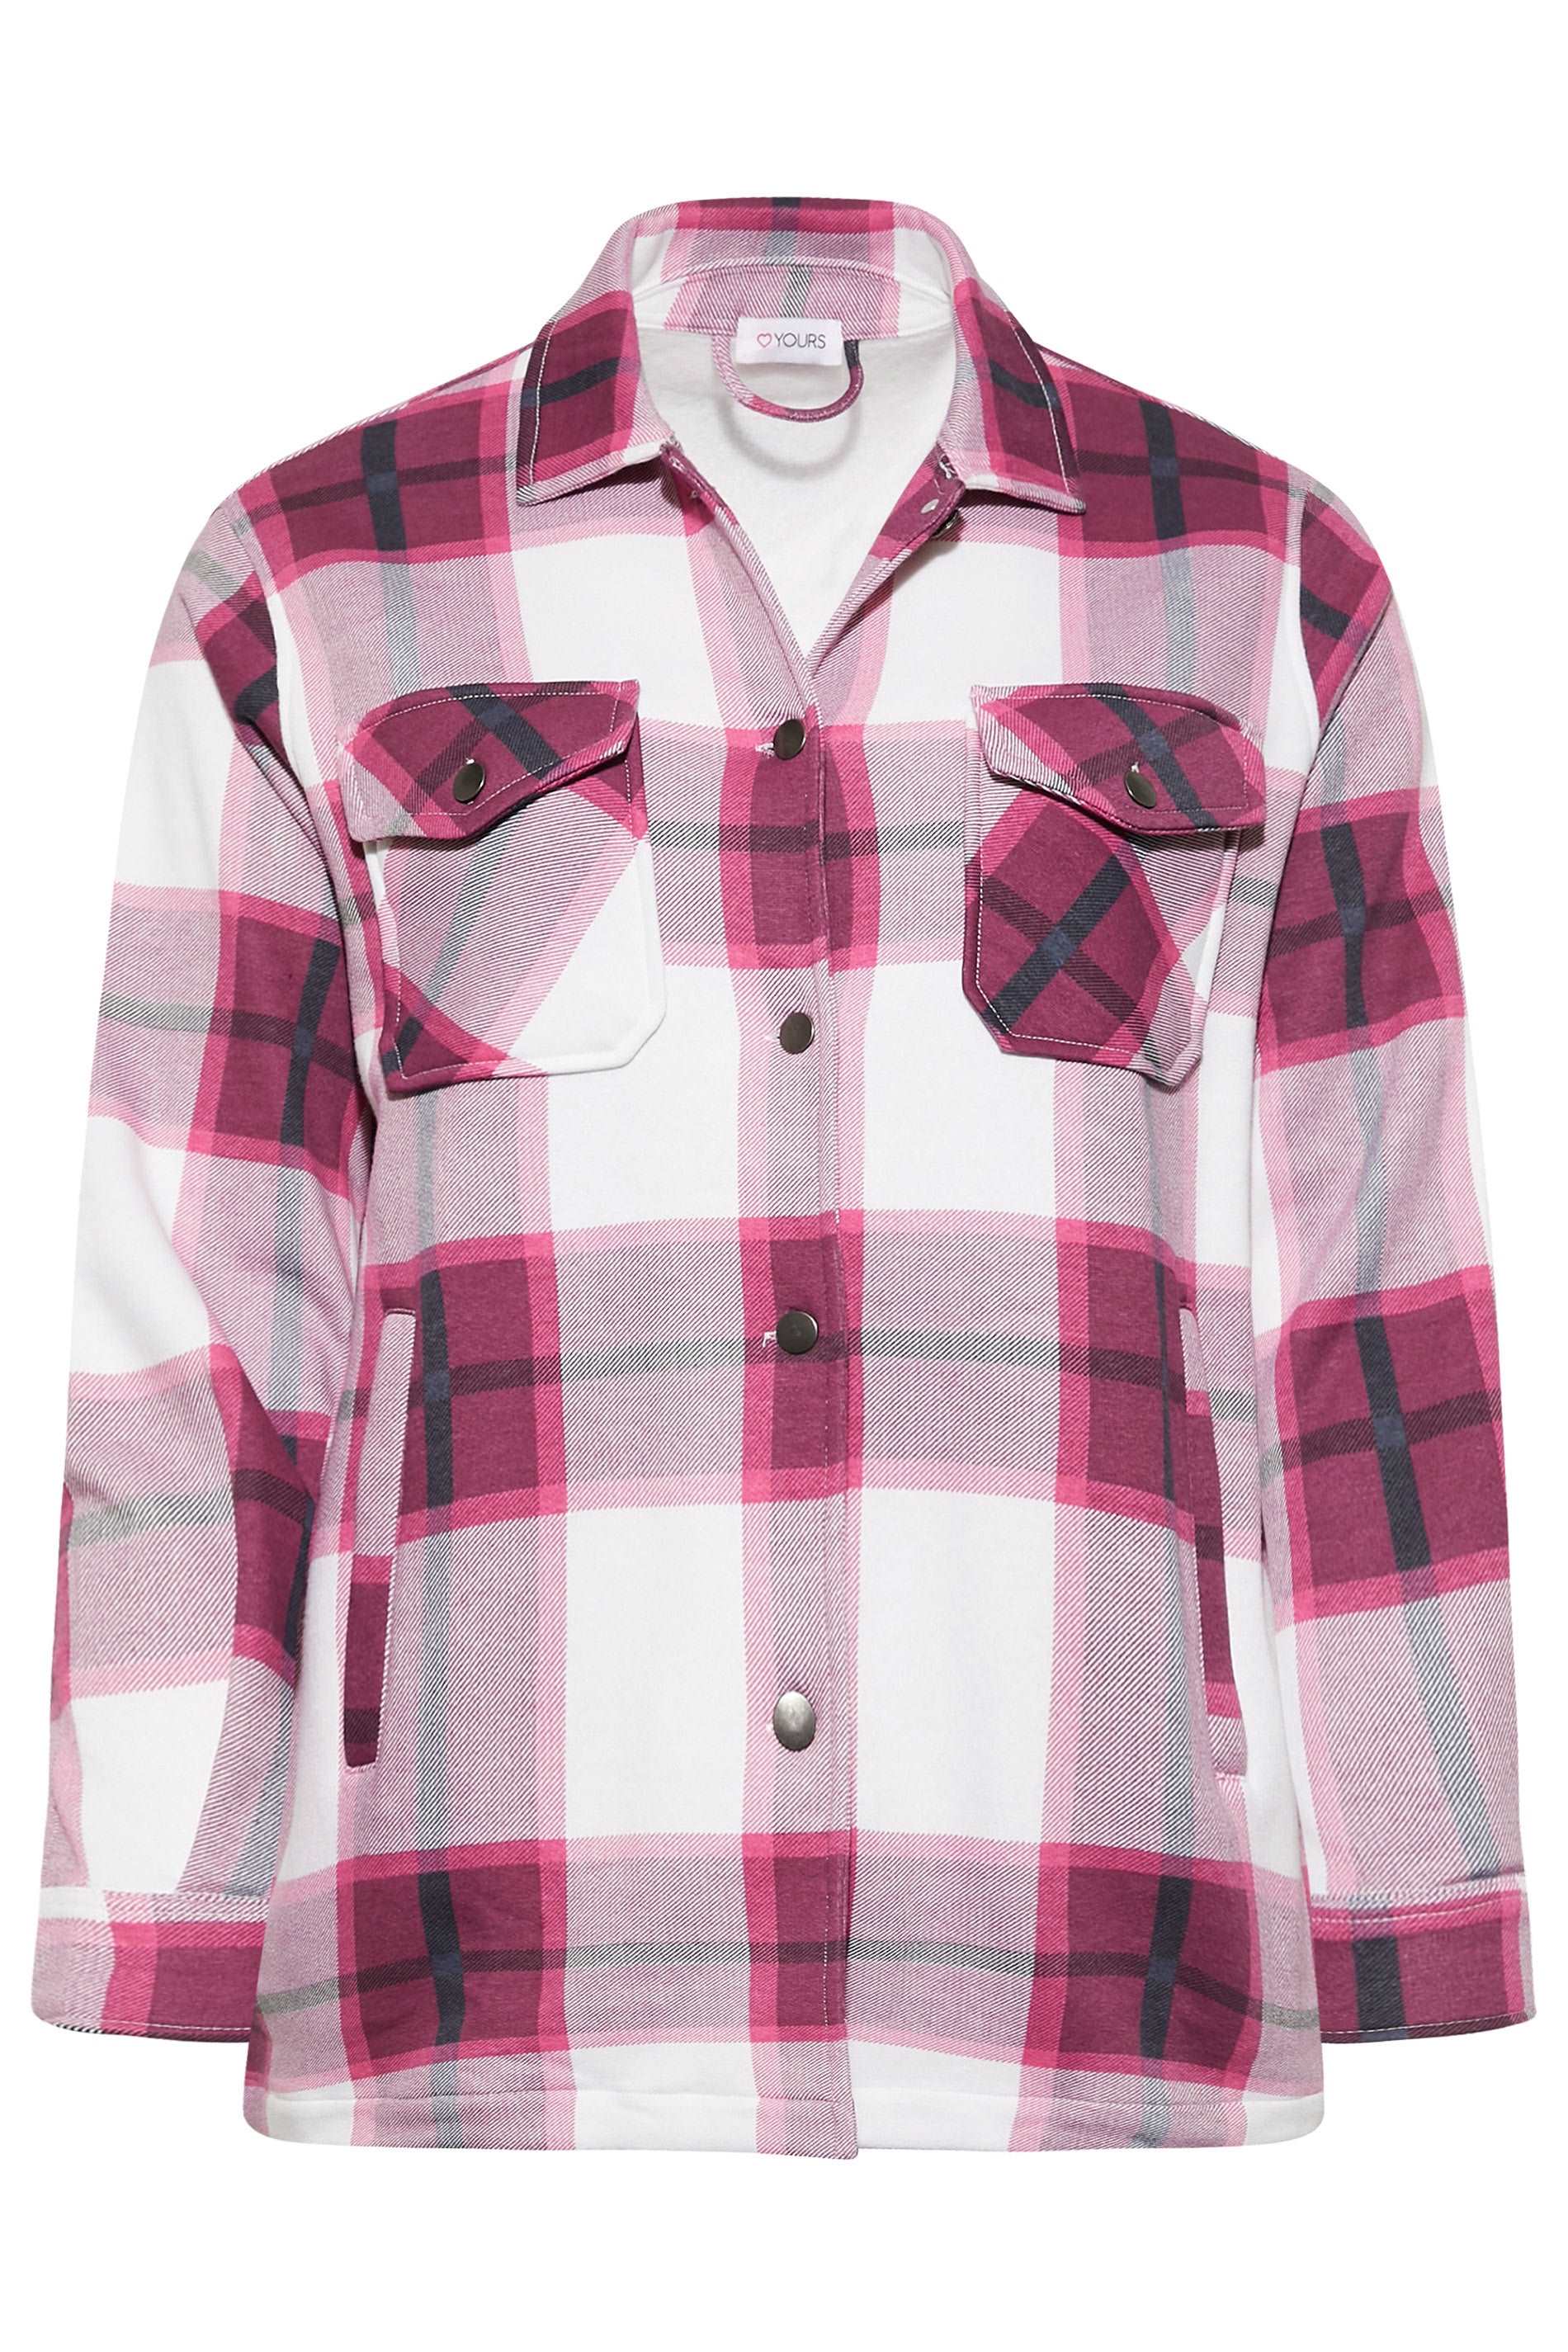 Dark Pink white Oversized check shacket For Her-2015 - FactoryX.pk